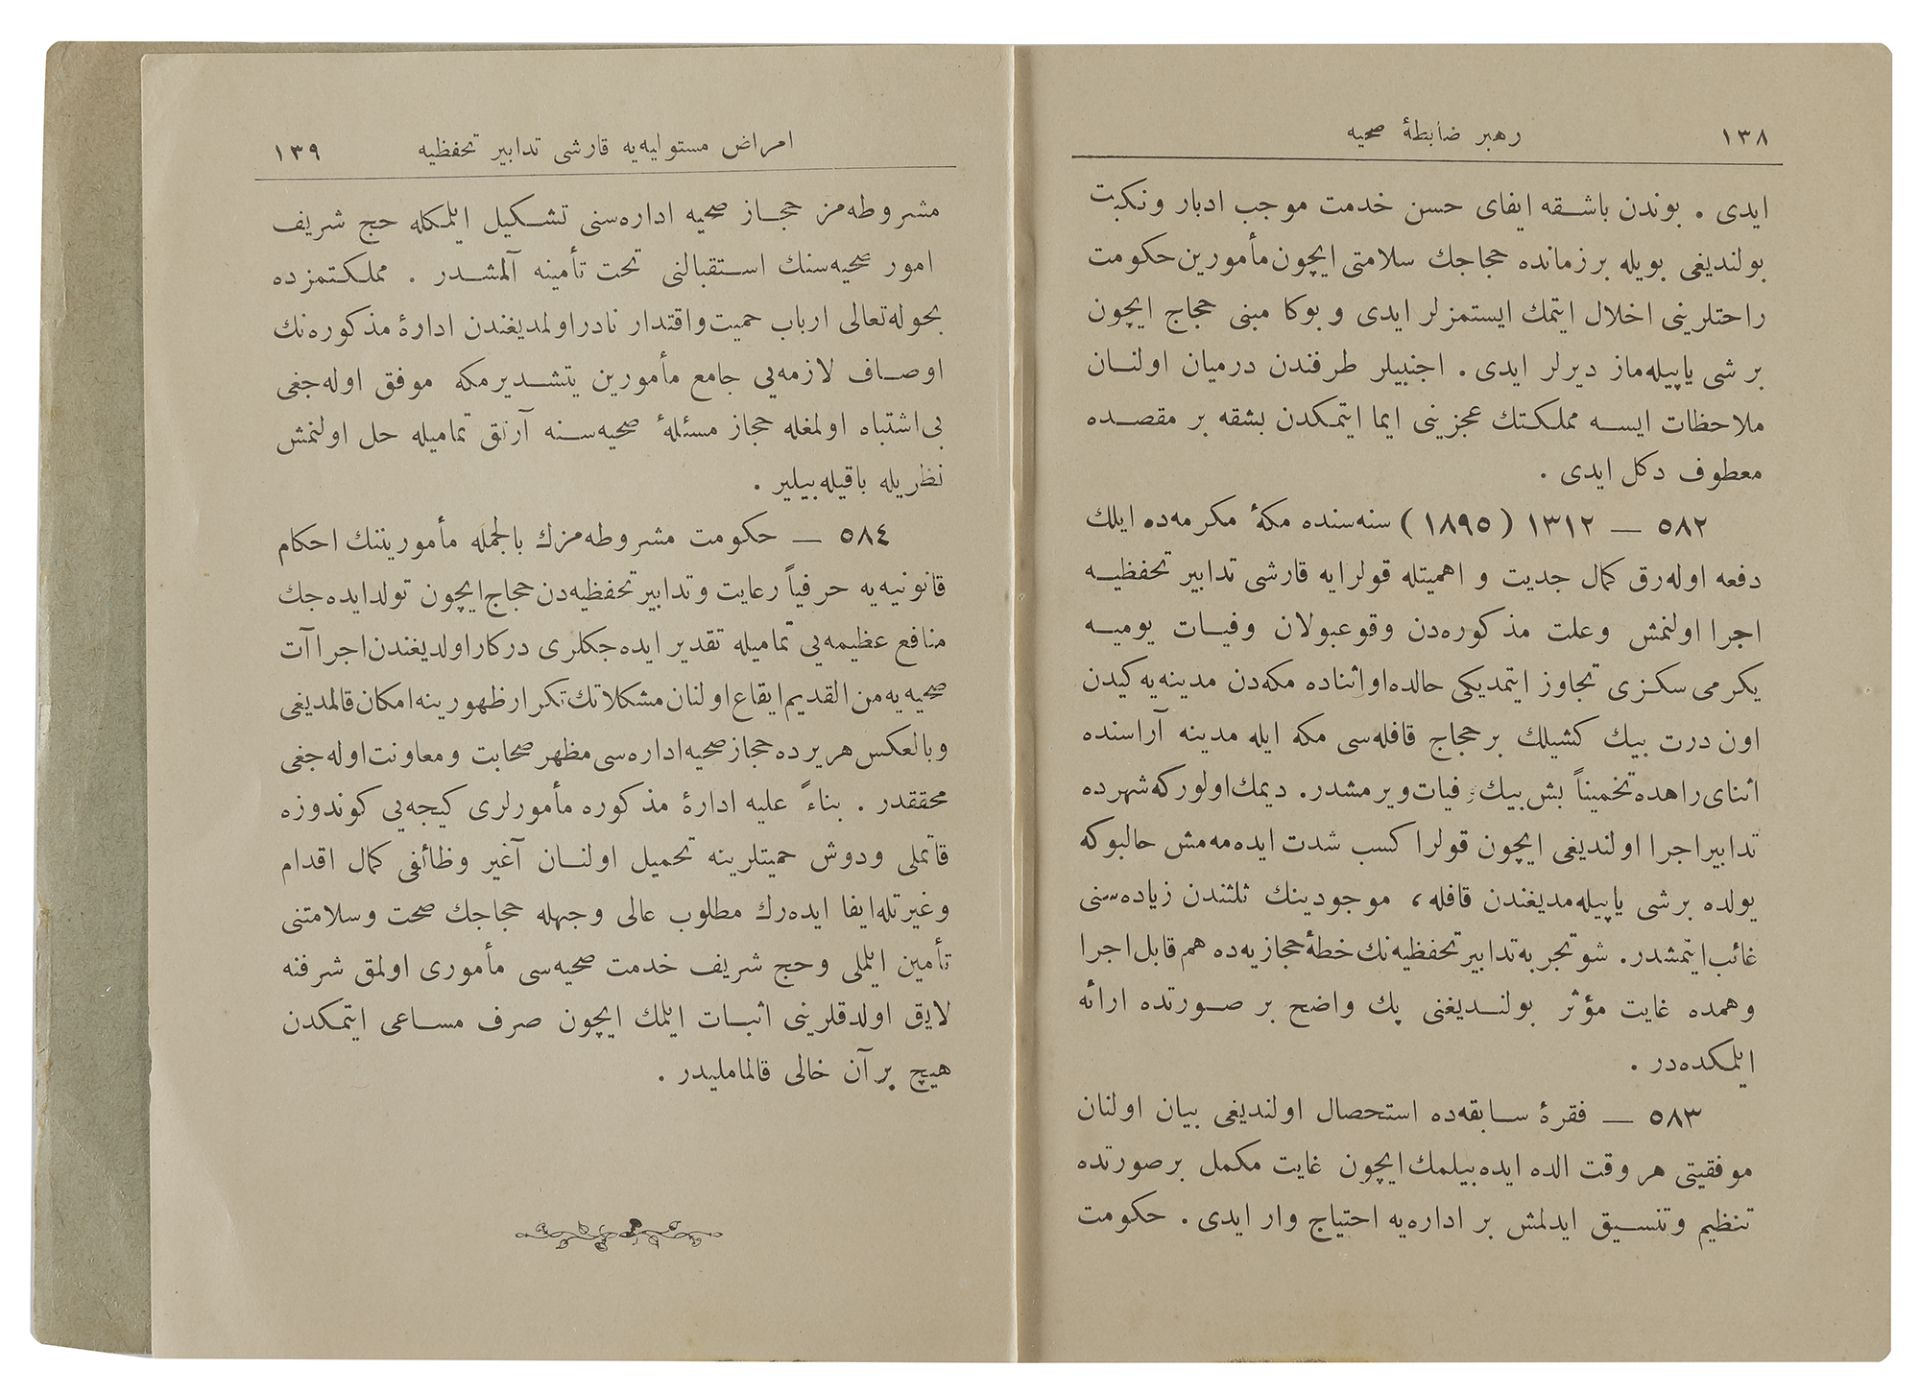 TWO BOOKS OF HIJAZ SANITARY ADMINISTRATION, ANNUAL REPORT FOR HAJJ, EDITED BY DR. HAJJ QASIM EZZ EL- - Image 8 of 12